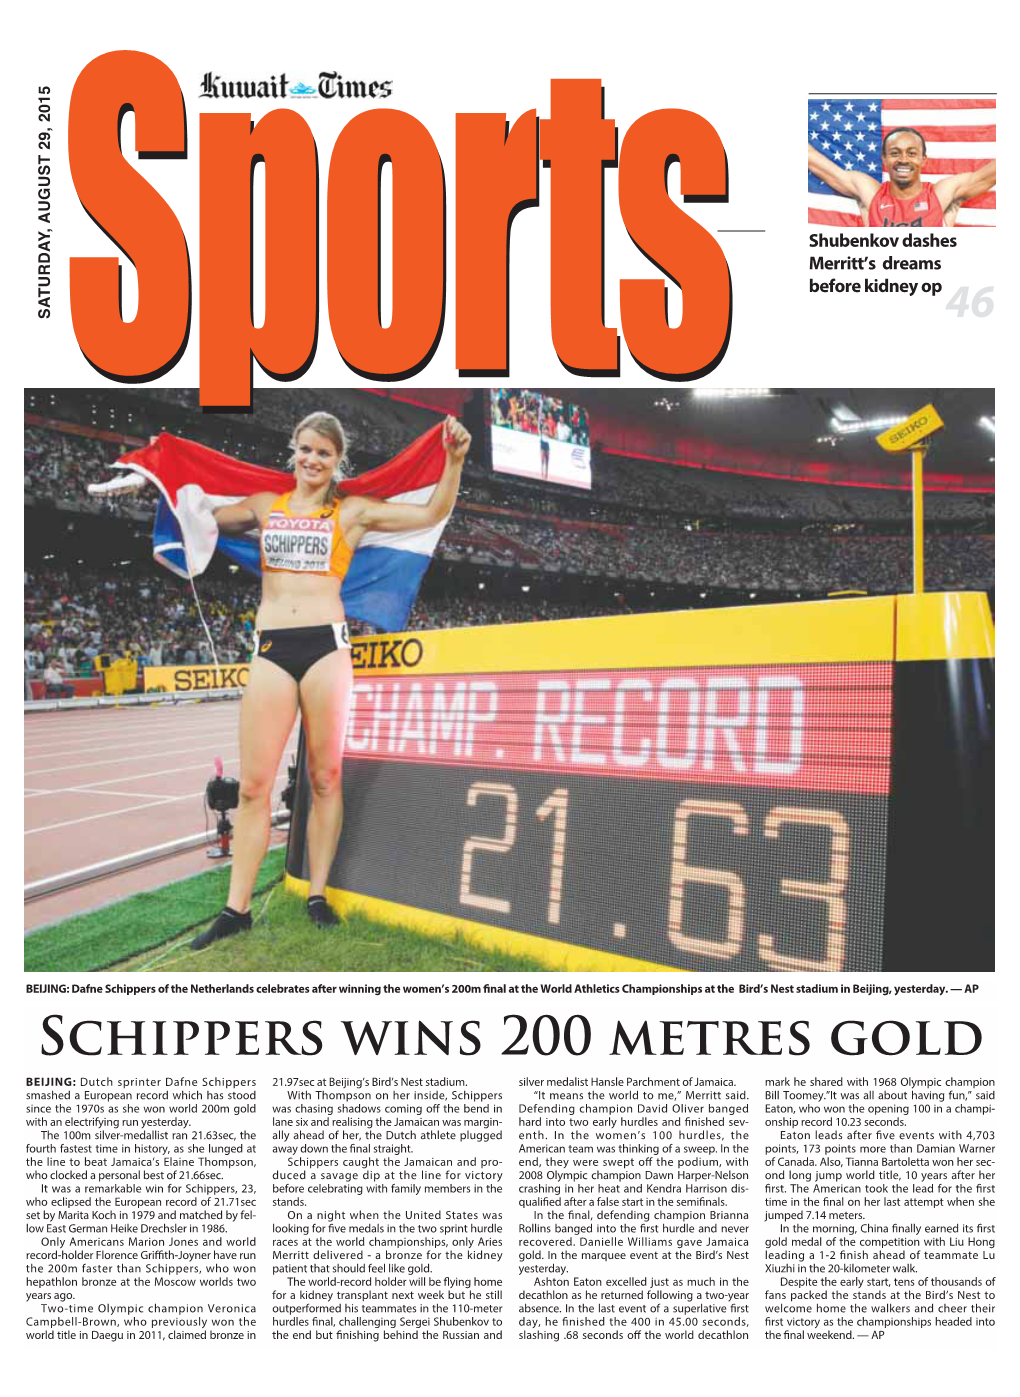 Schippers Wins 200 Metres Gold